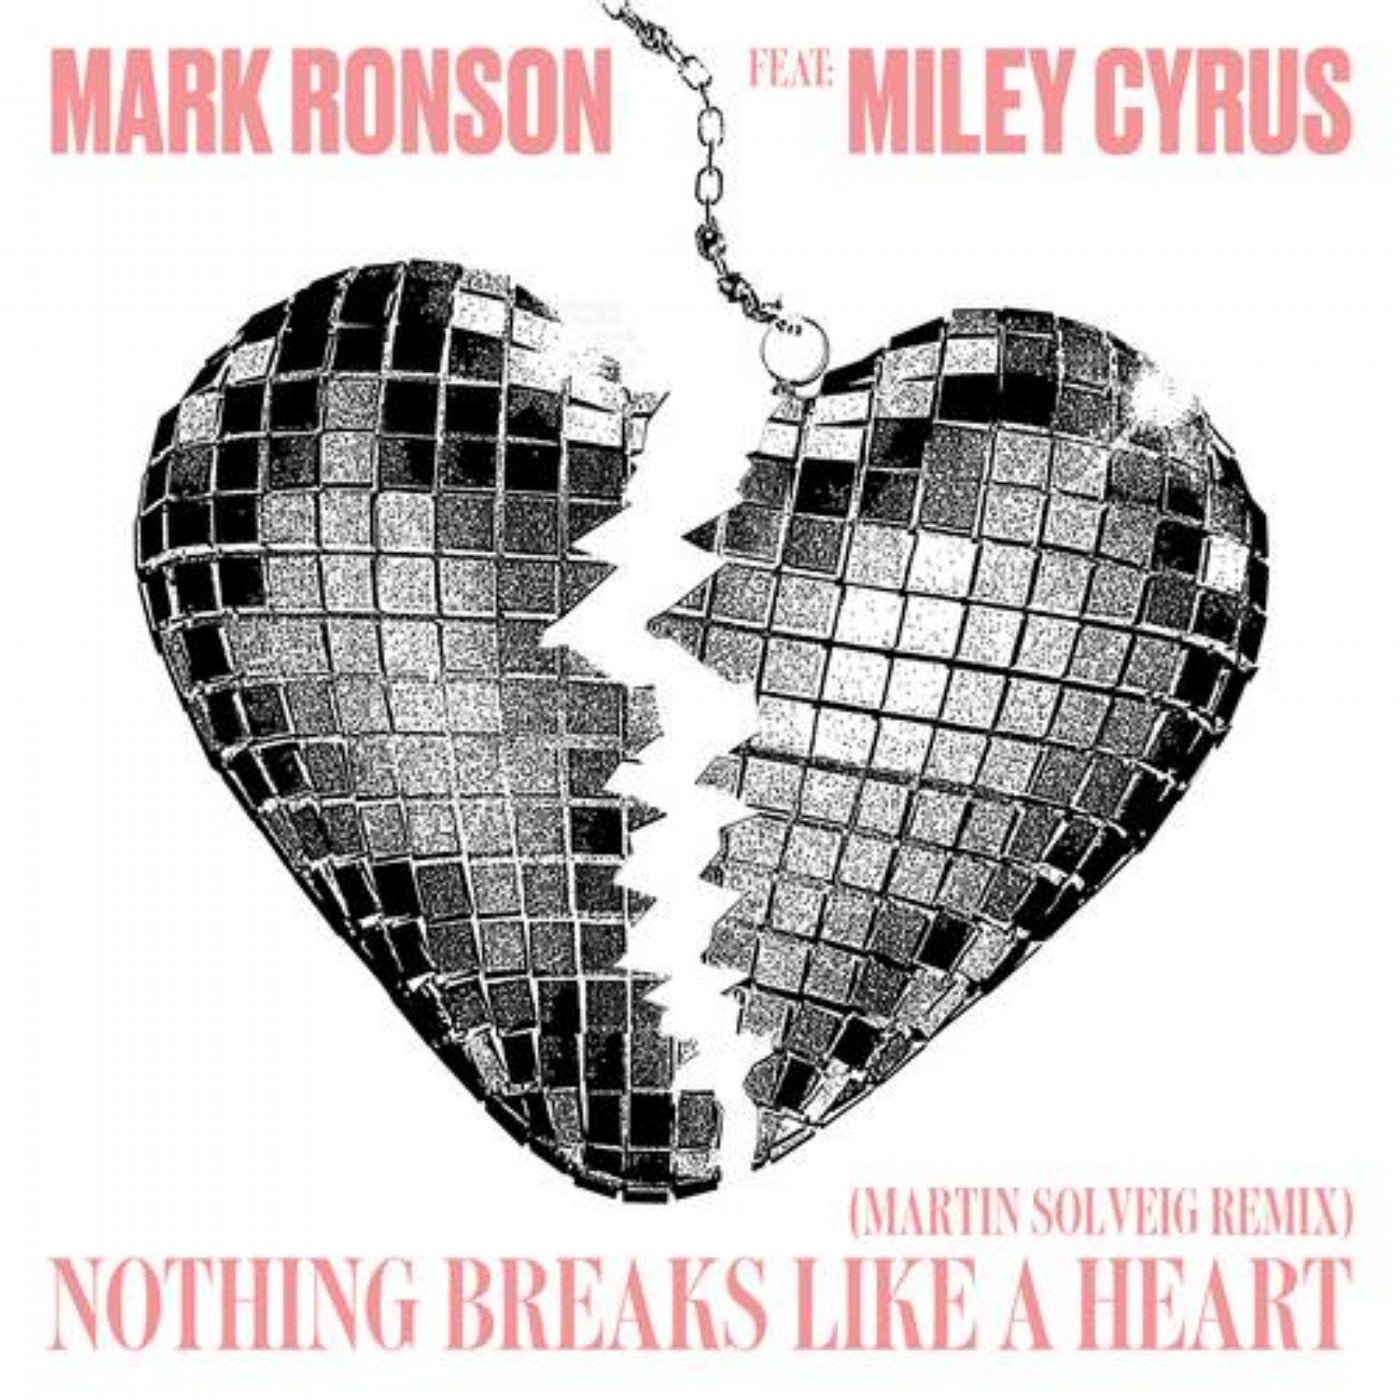 Like break 4. Mark Ronson nothing Breaks like a Heart обложка. Mark Ronson Miley Cyrus. Mark Ronson Miley Cyrus nothing Breaks like a Heart.